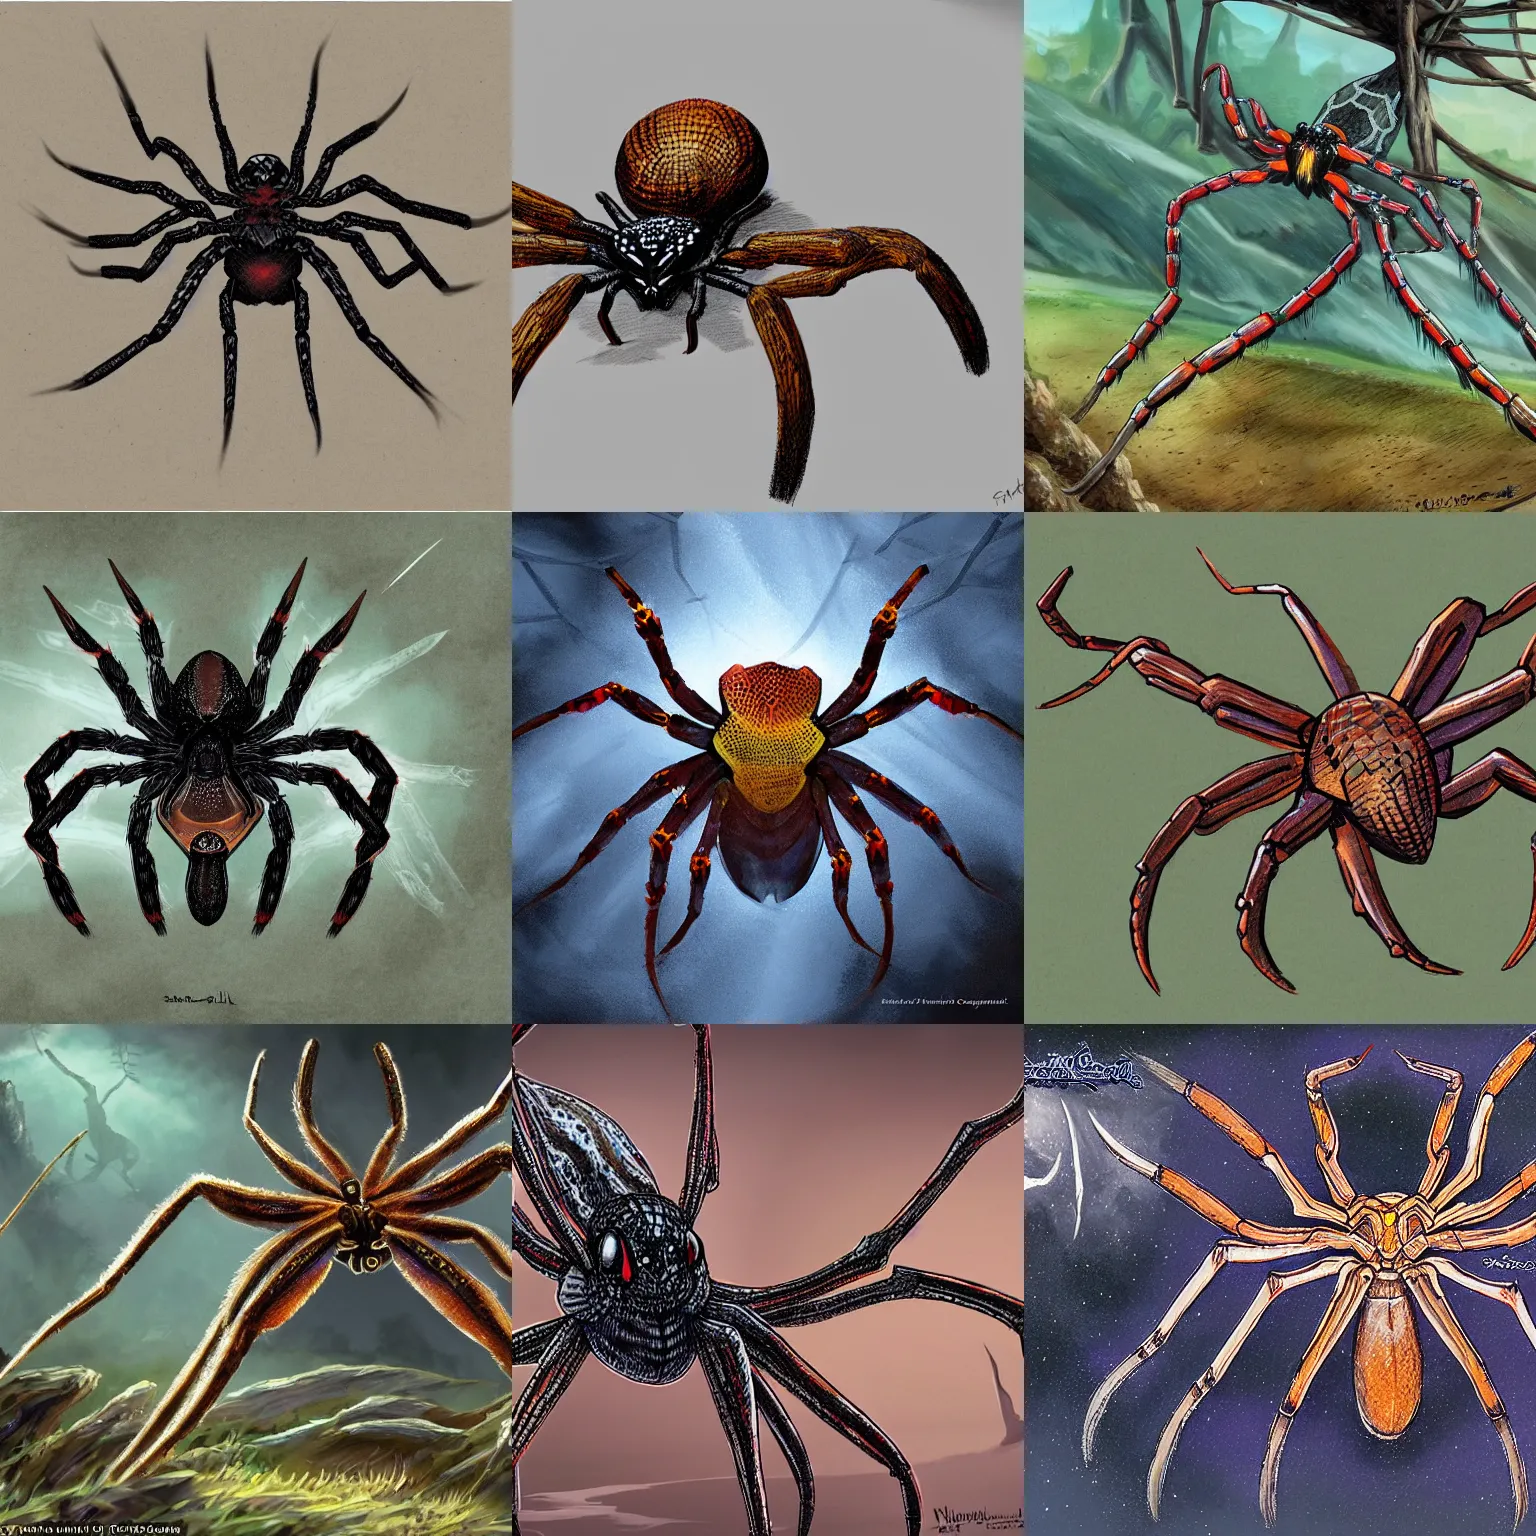 Prompt: Concept art of the Crescent Weave Spider, depicted in its natural habitat, fantasy art